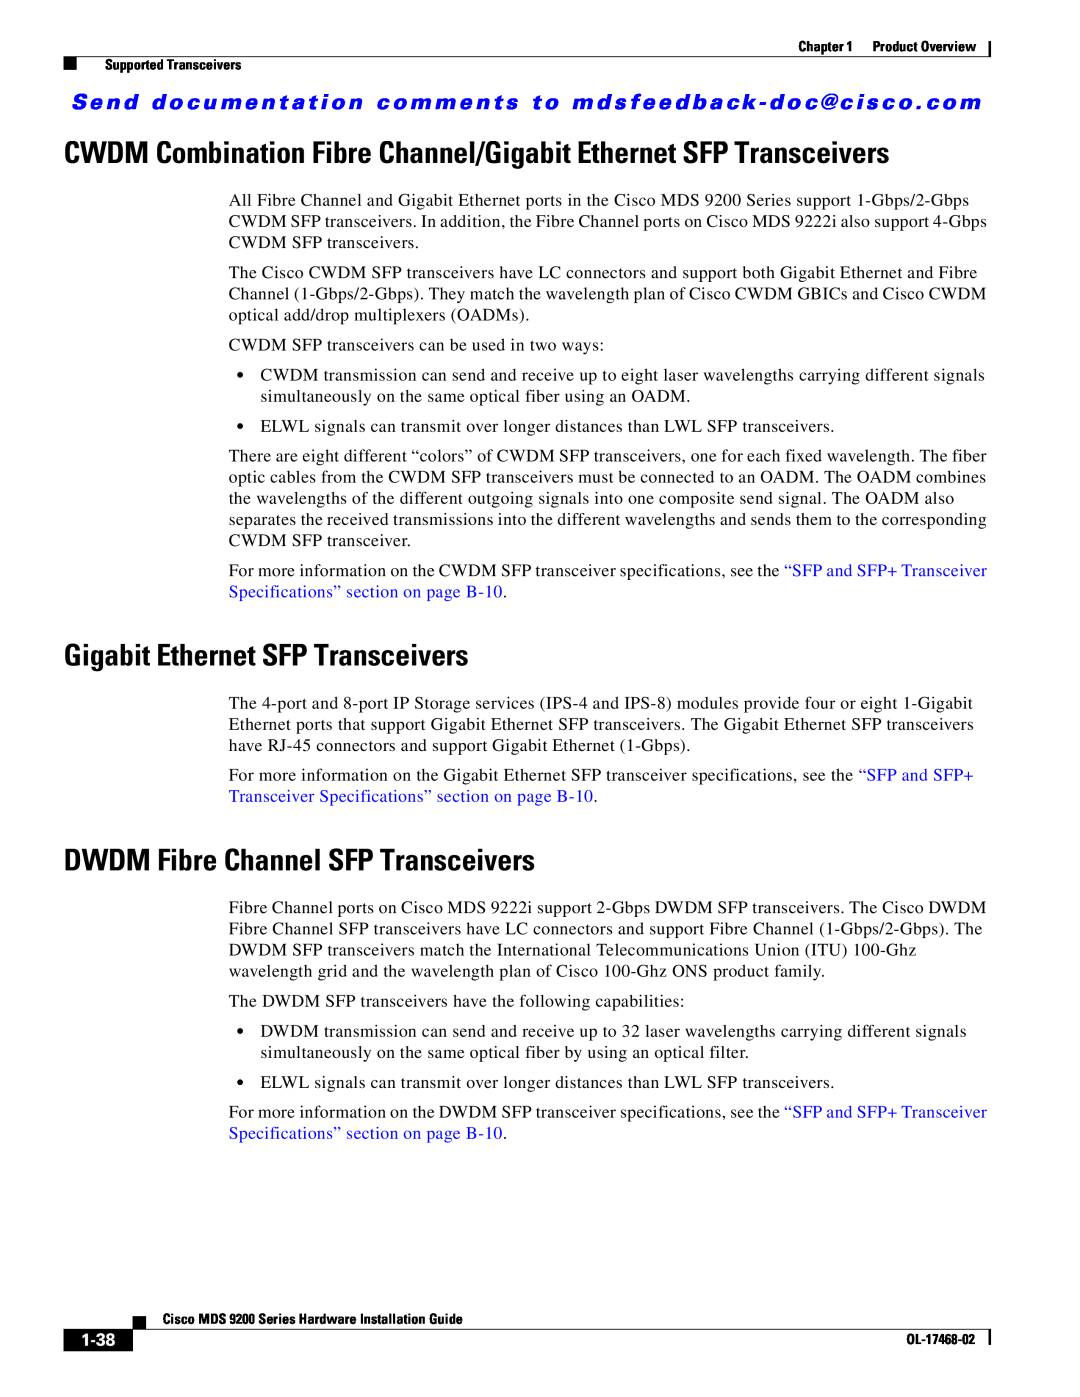 Cisco Systems MDS 9200 Series manual Gigabit Ethernet SFP Transceivers, DWDM Fibre Channel SFP Transceivers, 1-38 